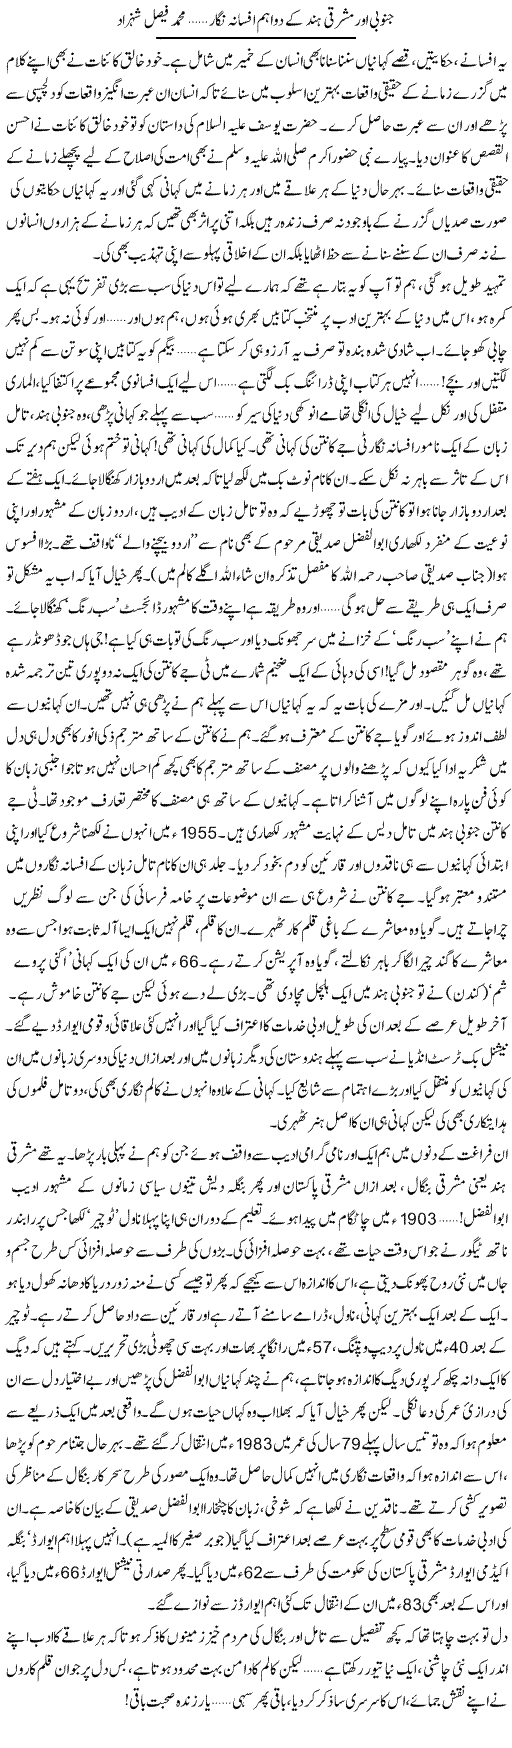 Janubi Our Mashraqi Hind K Do Aham Afsana Nigar | Muhammad Faisal Shehzad | Daily Urdu Columns